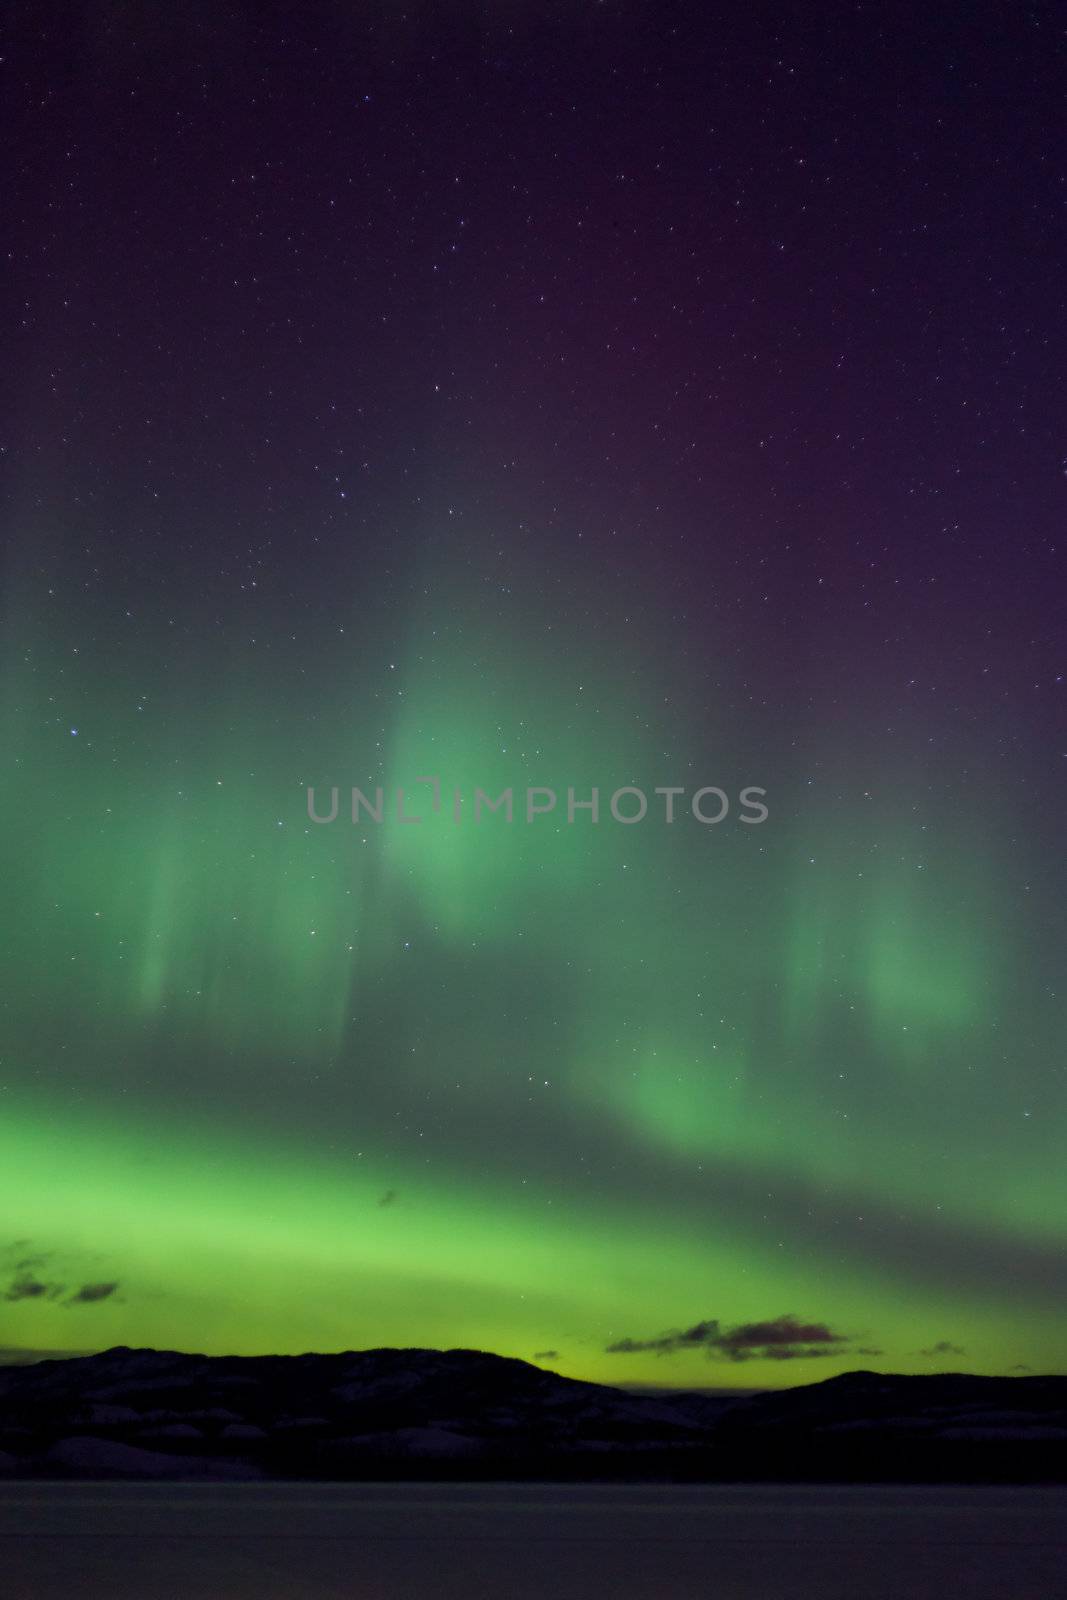 Colorful northern lights (aurora borealis) substorm on dark night sky with myriads of stars.